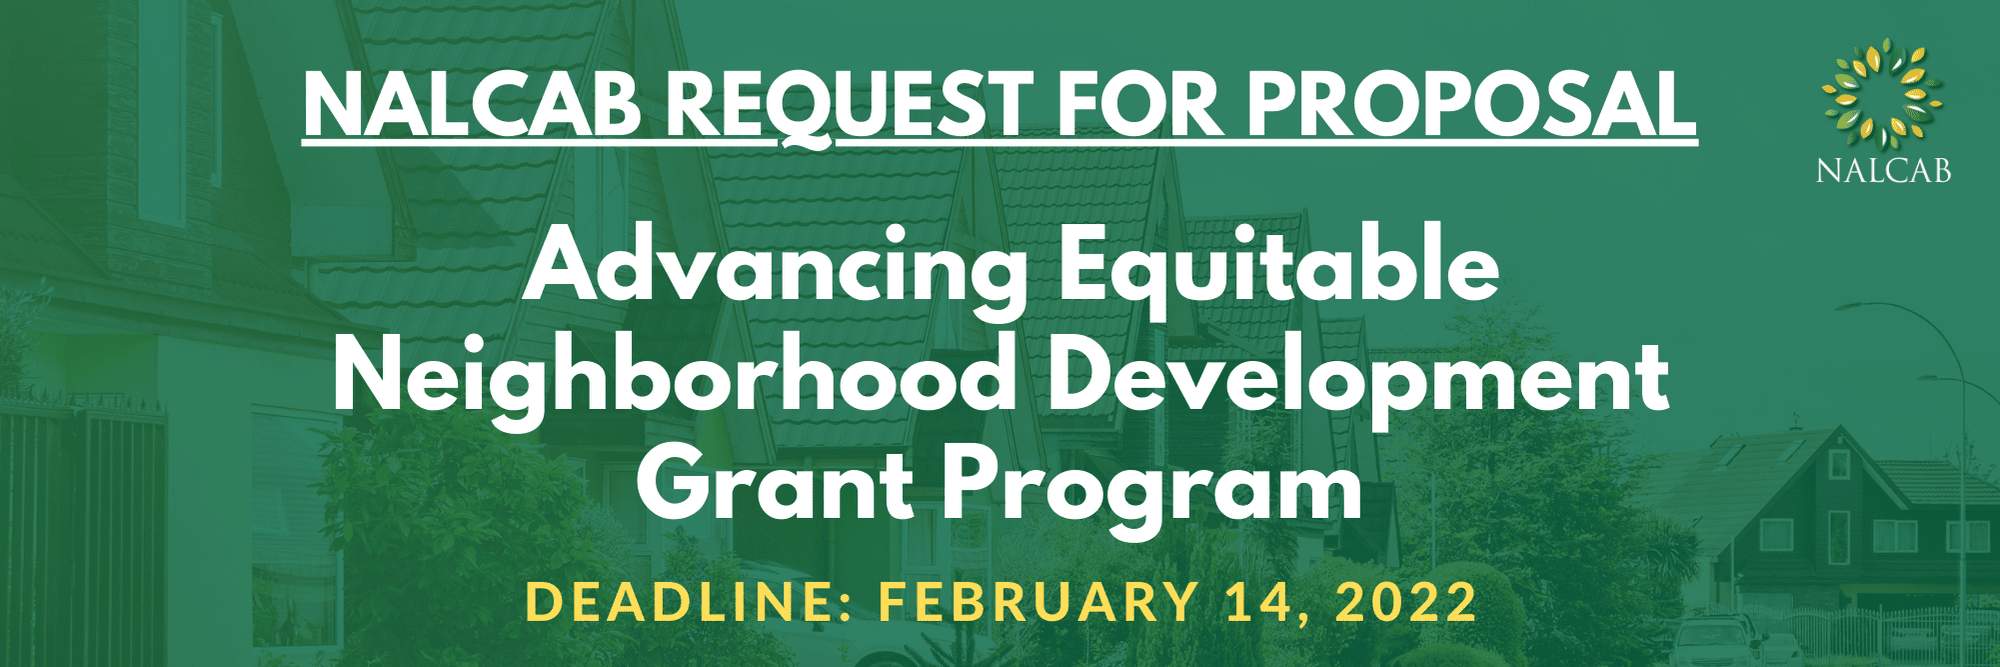 Advancing Equitable Neighborhood Development Grant Program Baner